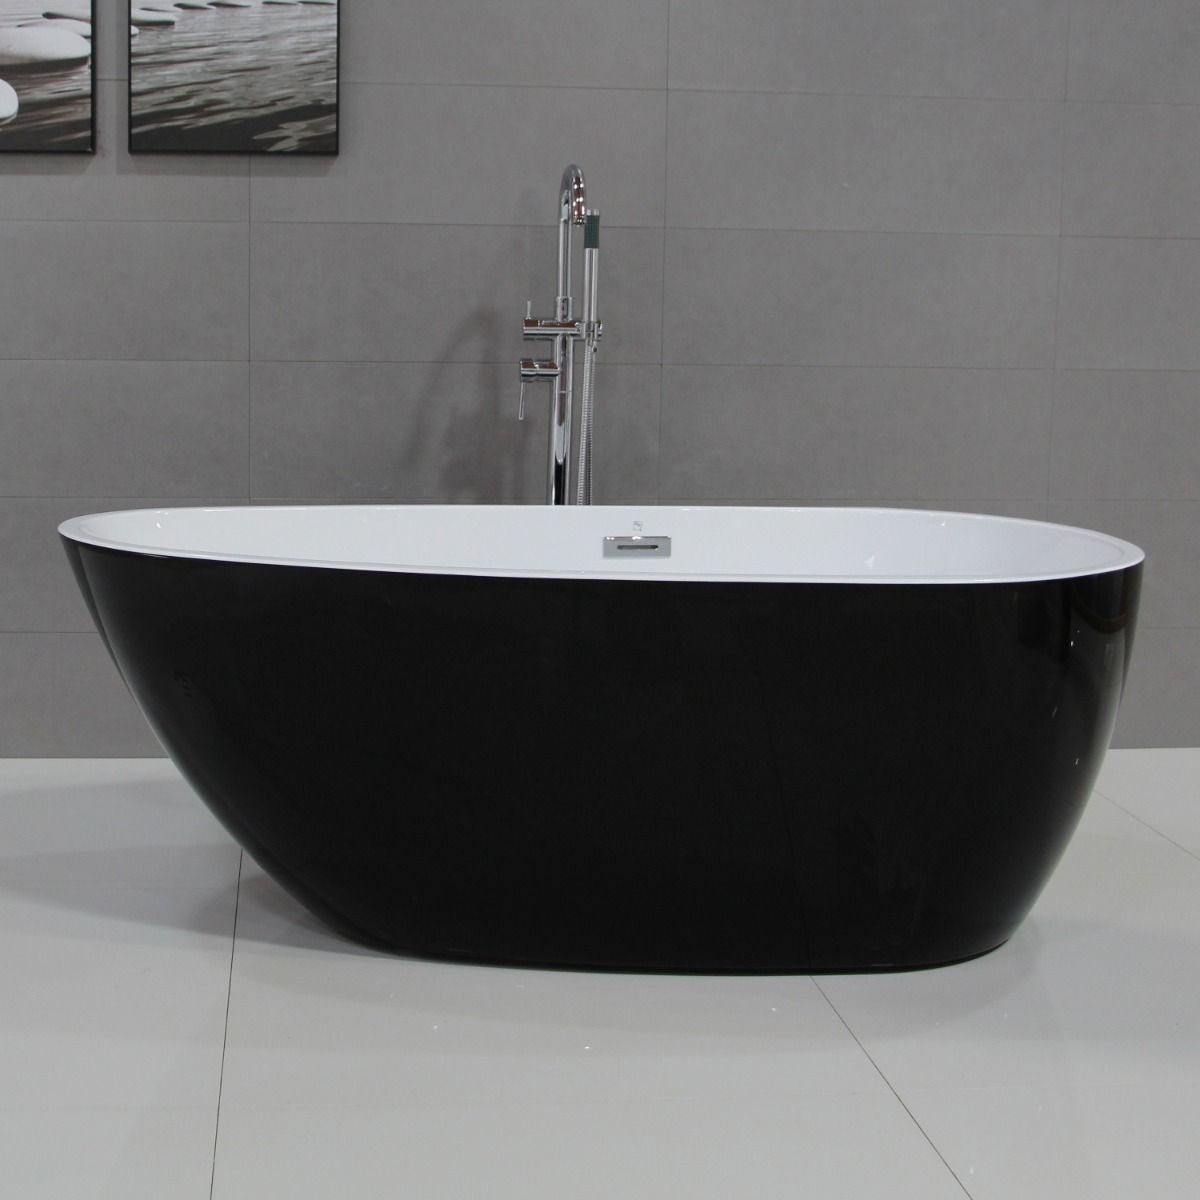 ALFI brand AB8862 59 Inch Black & White Oval Free Standing Soaking Bathtub - Elite Vitality